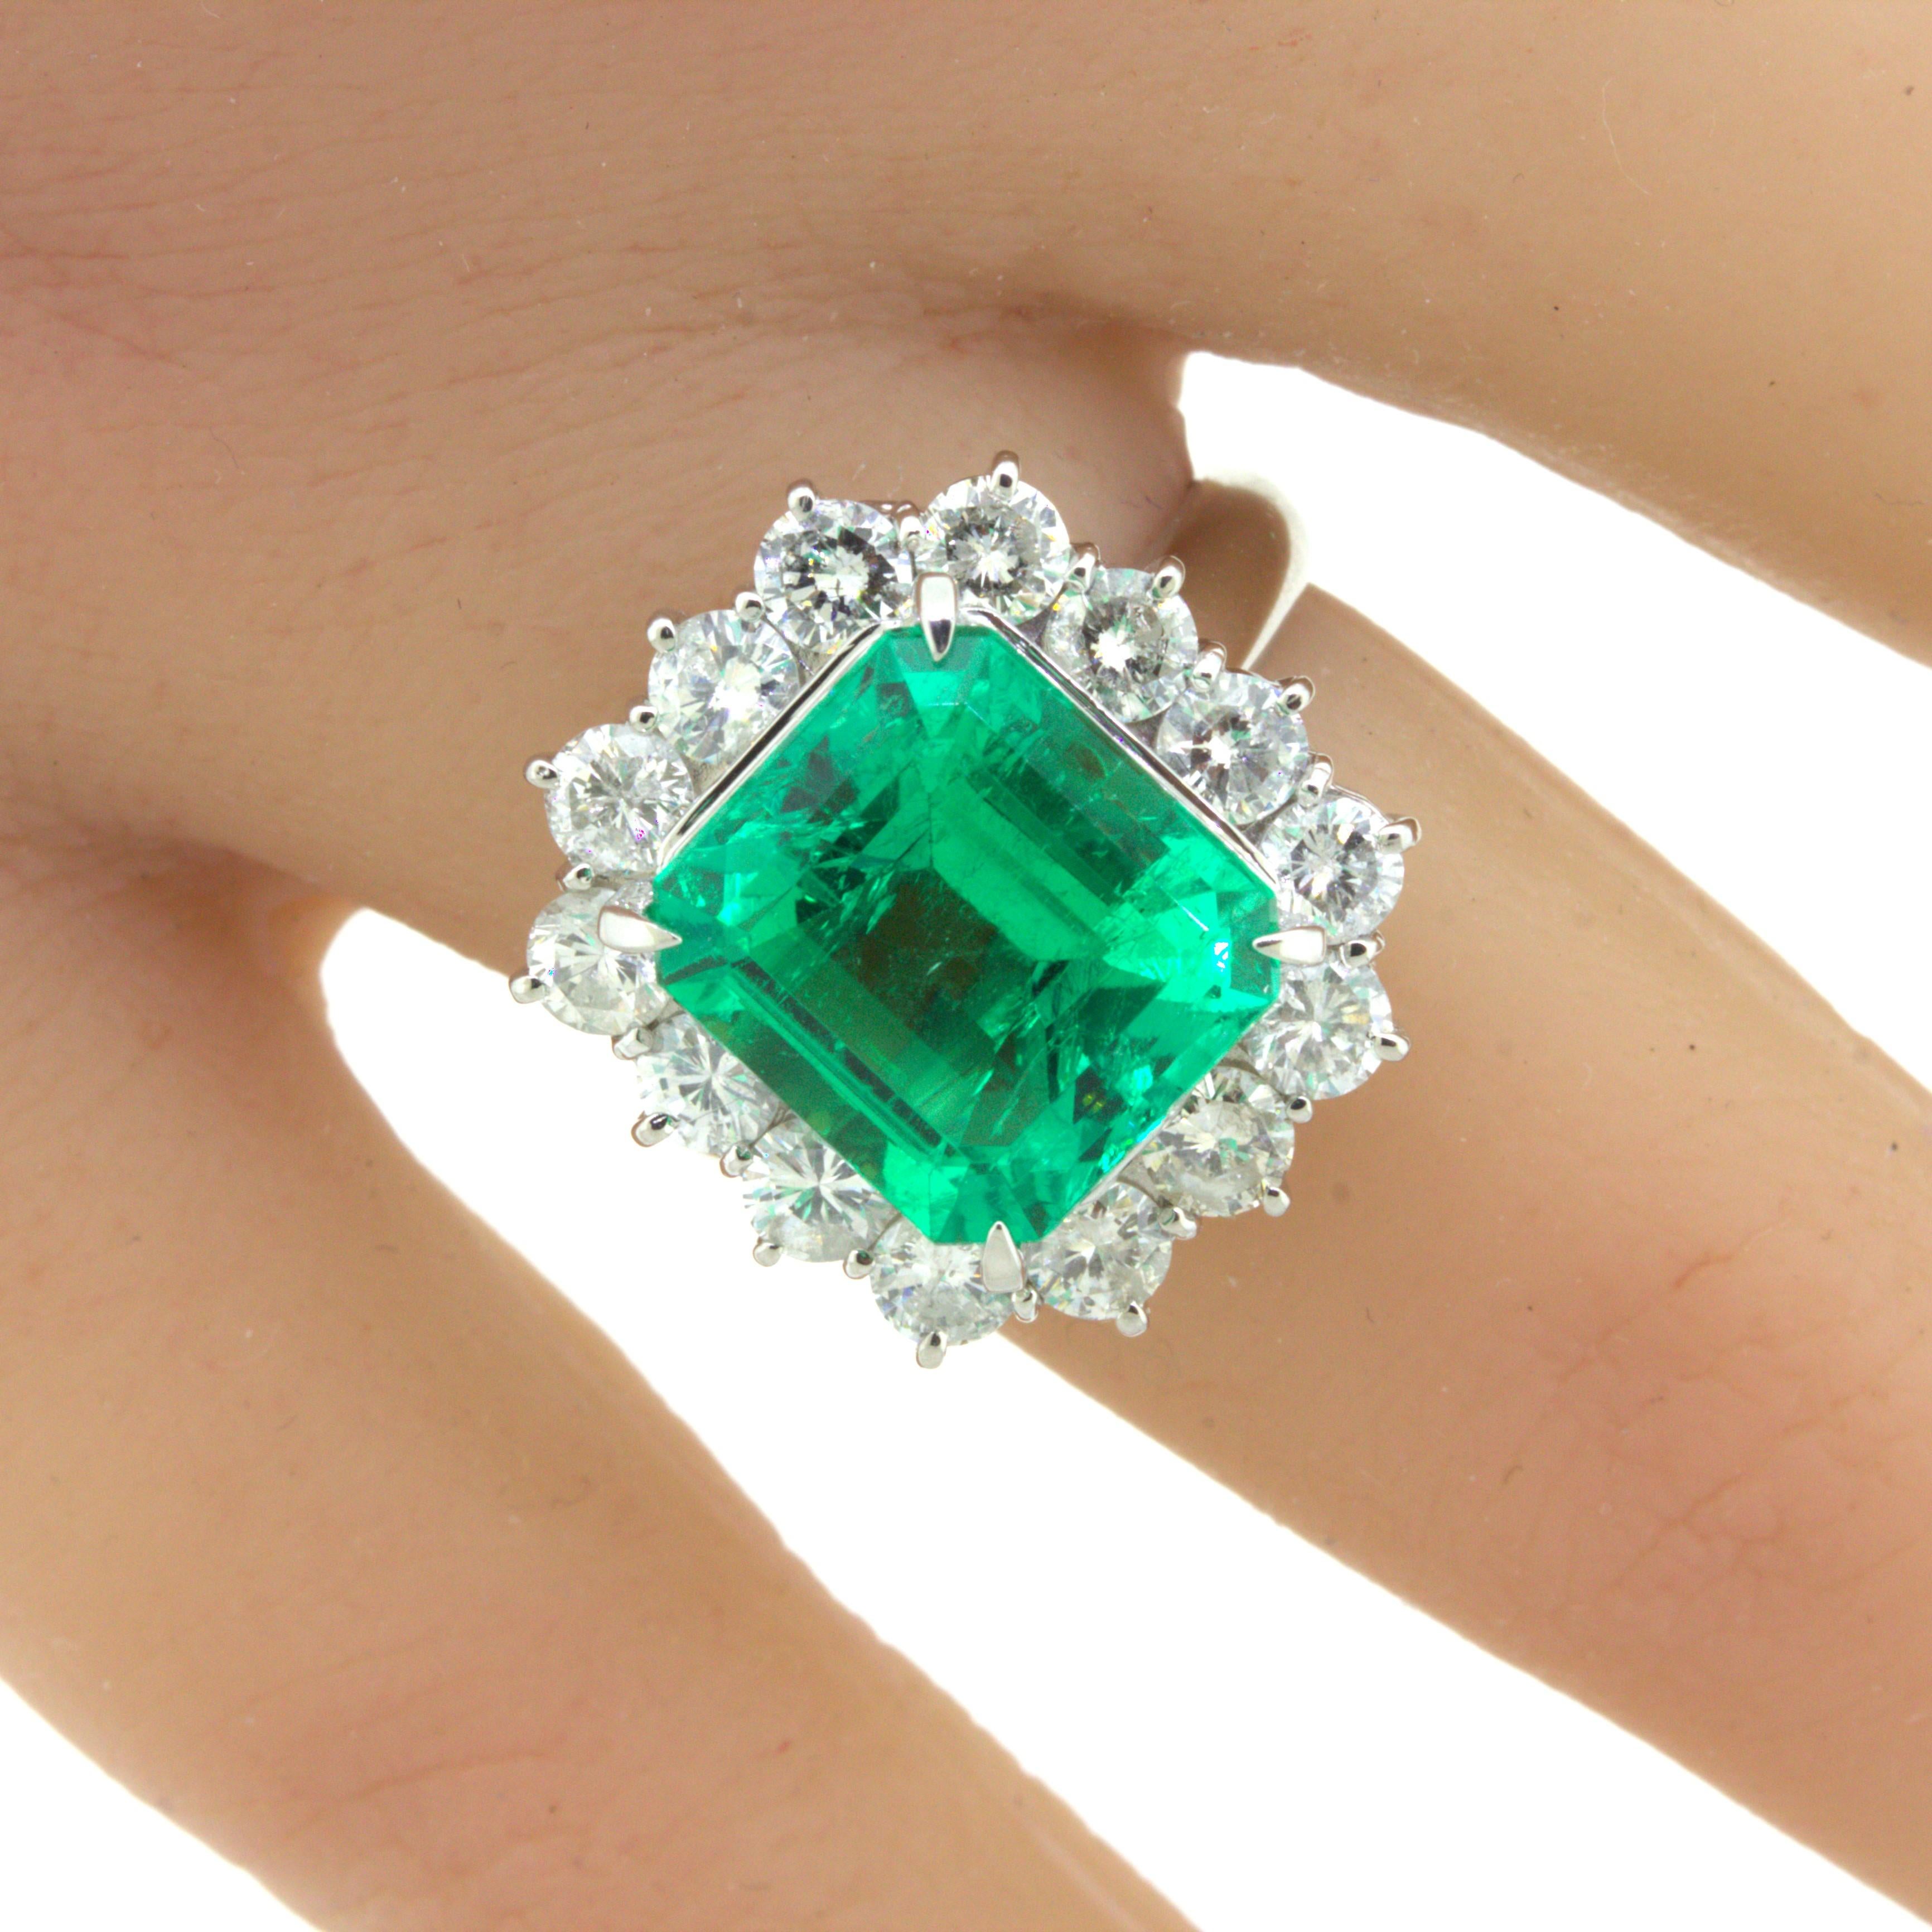 Superb 6.12 Carat Colombian Emerald Diamond Platinum Ring, GIA Certified 9